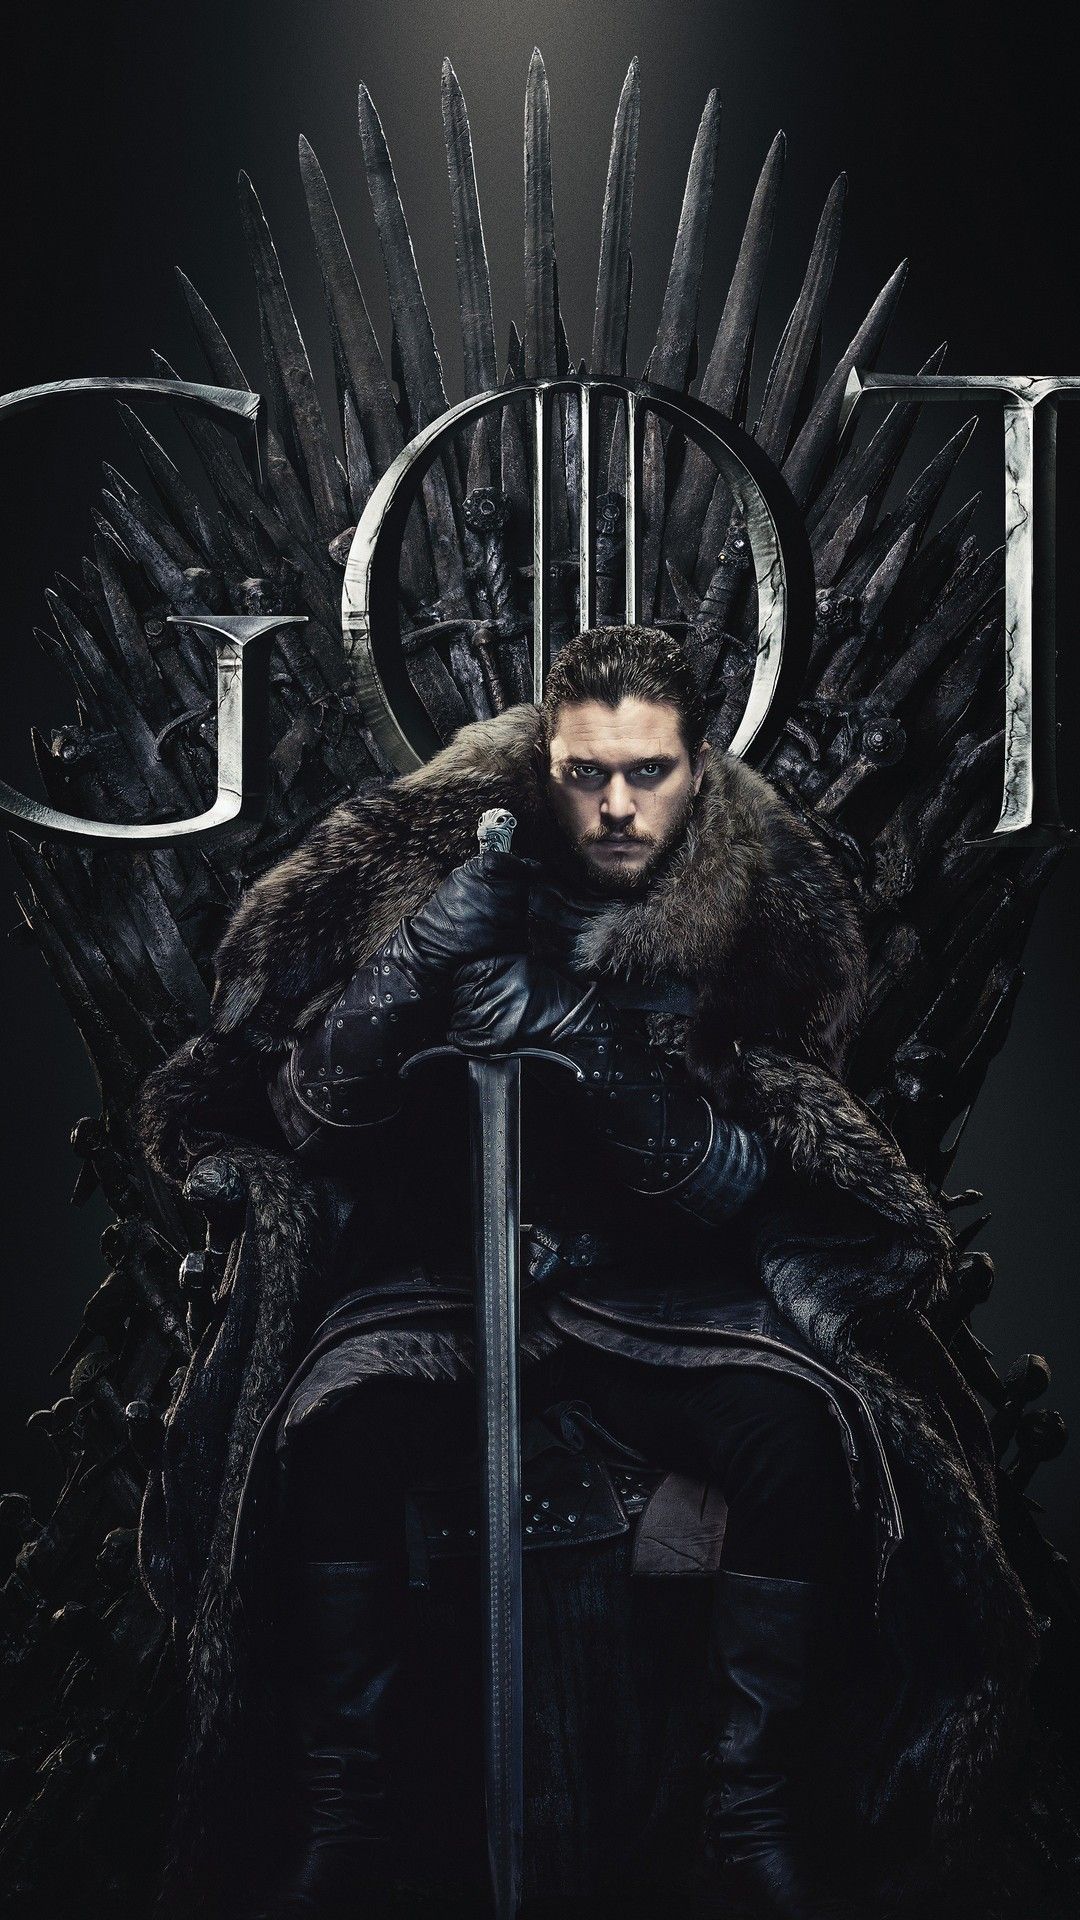 Game of Thrones 8 Season iPhone X Wallpaper. Game of thrones poster, Jon snow, Game of thrones facts